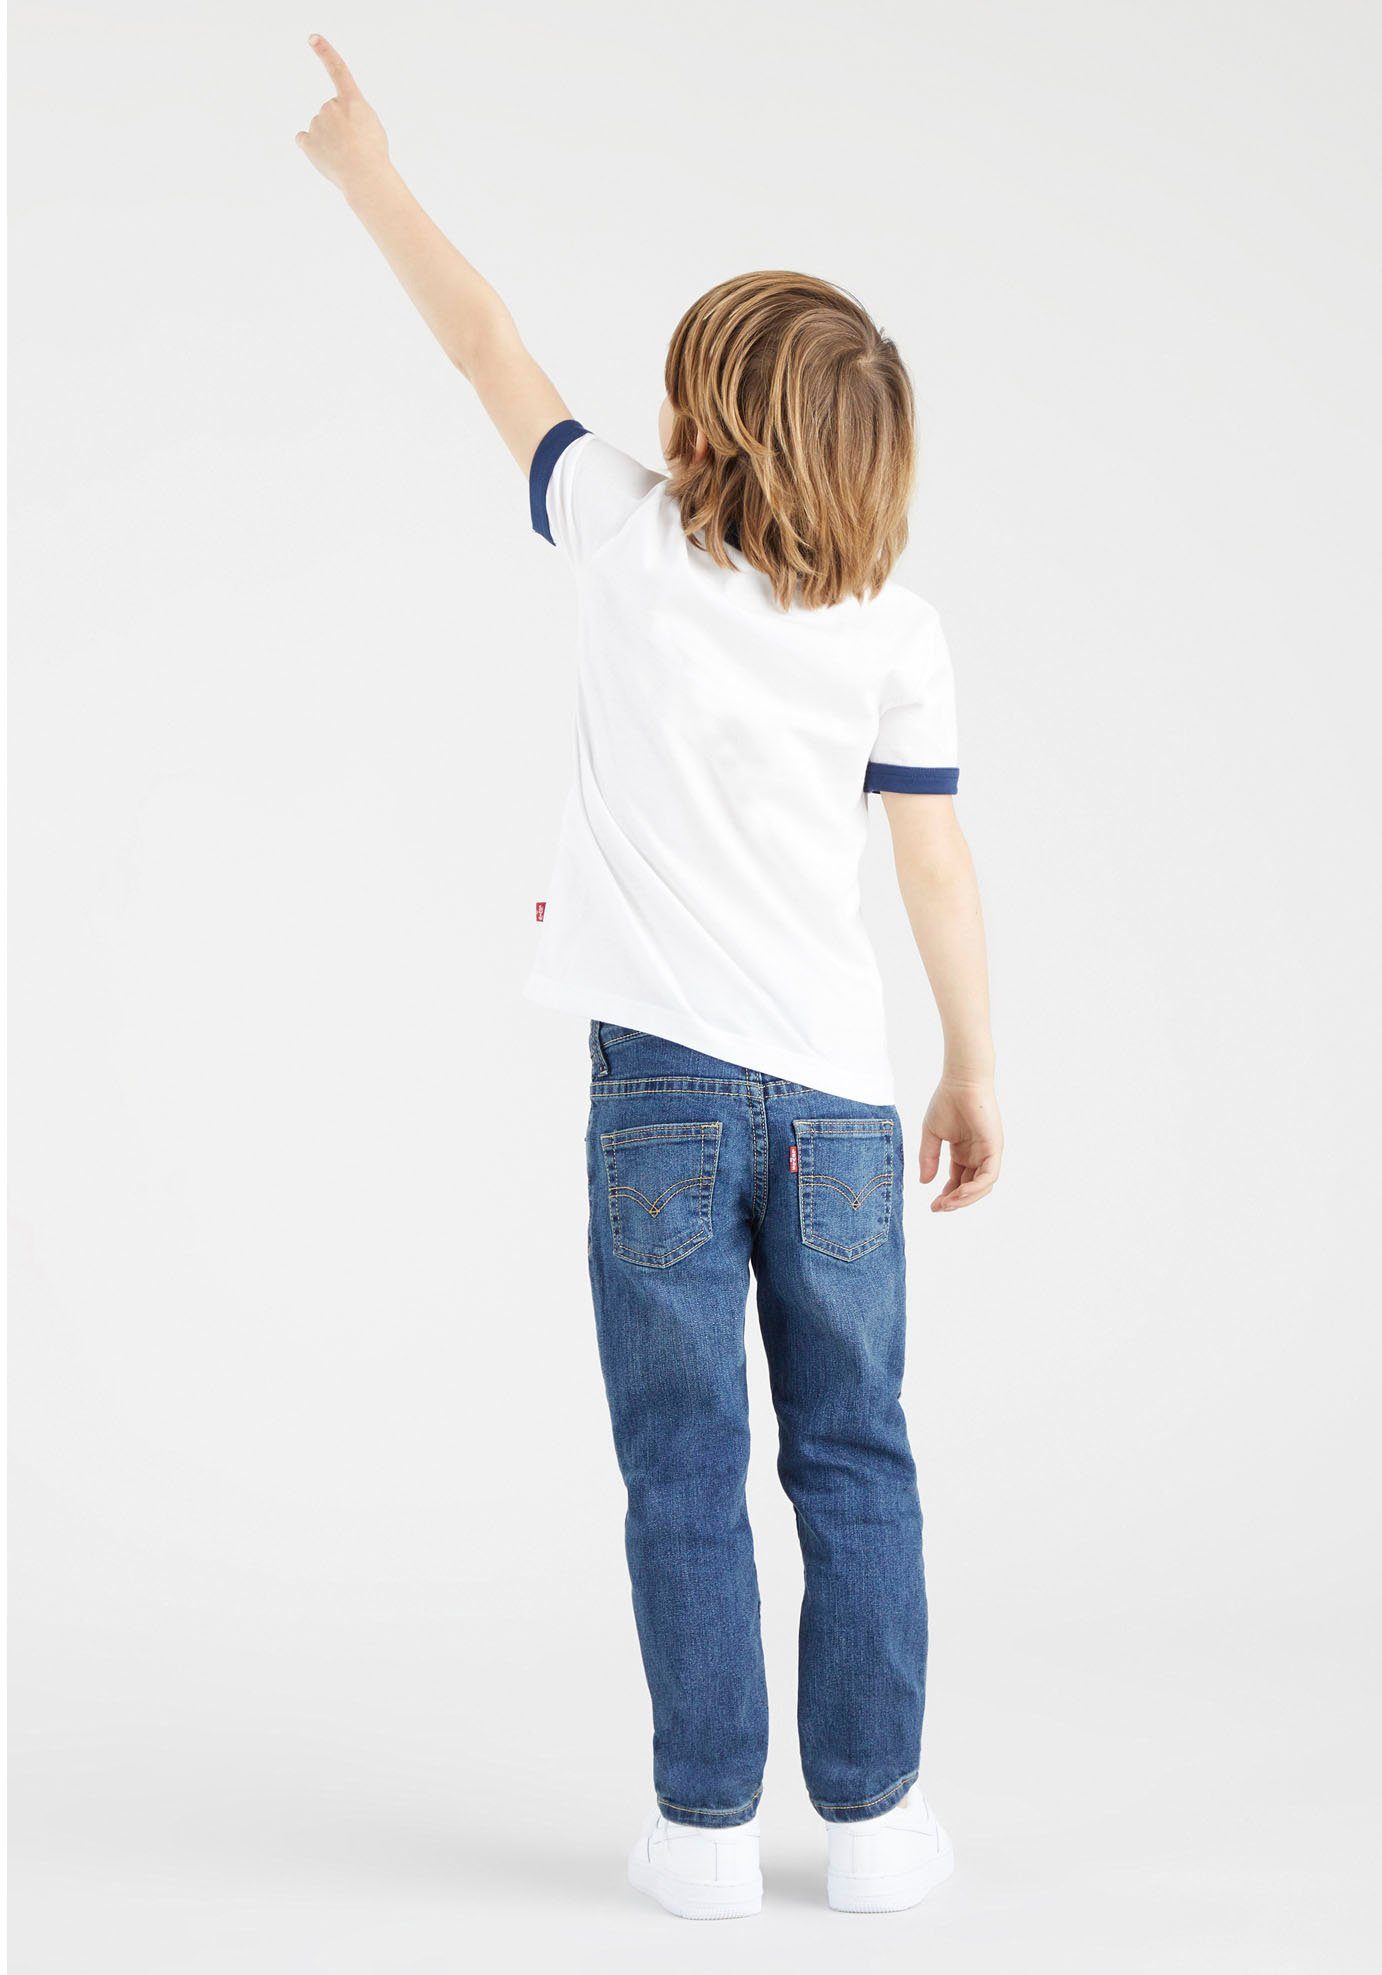 for used 511 Stretch-Jeans PERFORMANCE SOFT indigo ECO LVB Kids BOYS Levi's® blue mid J